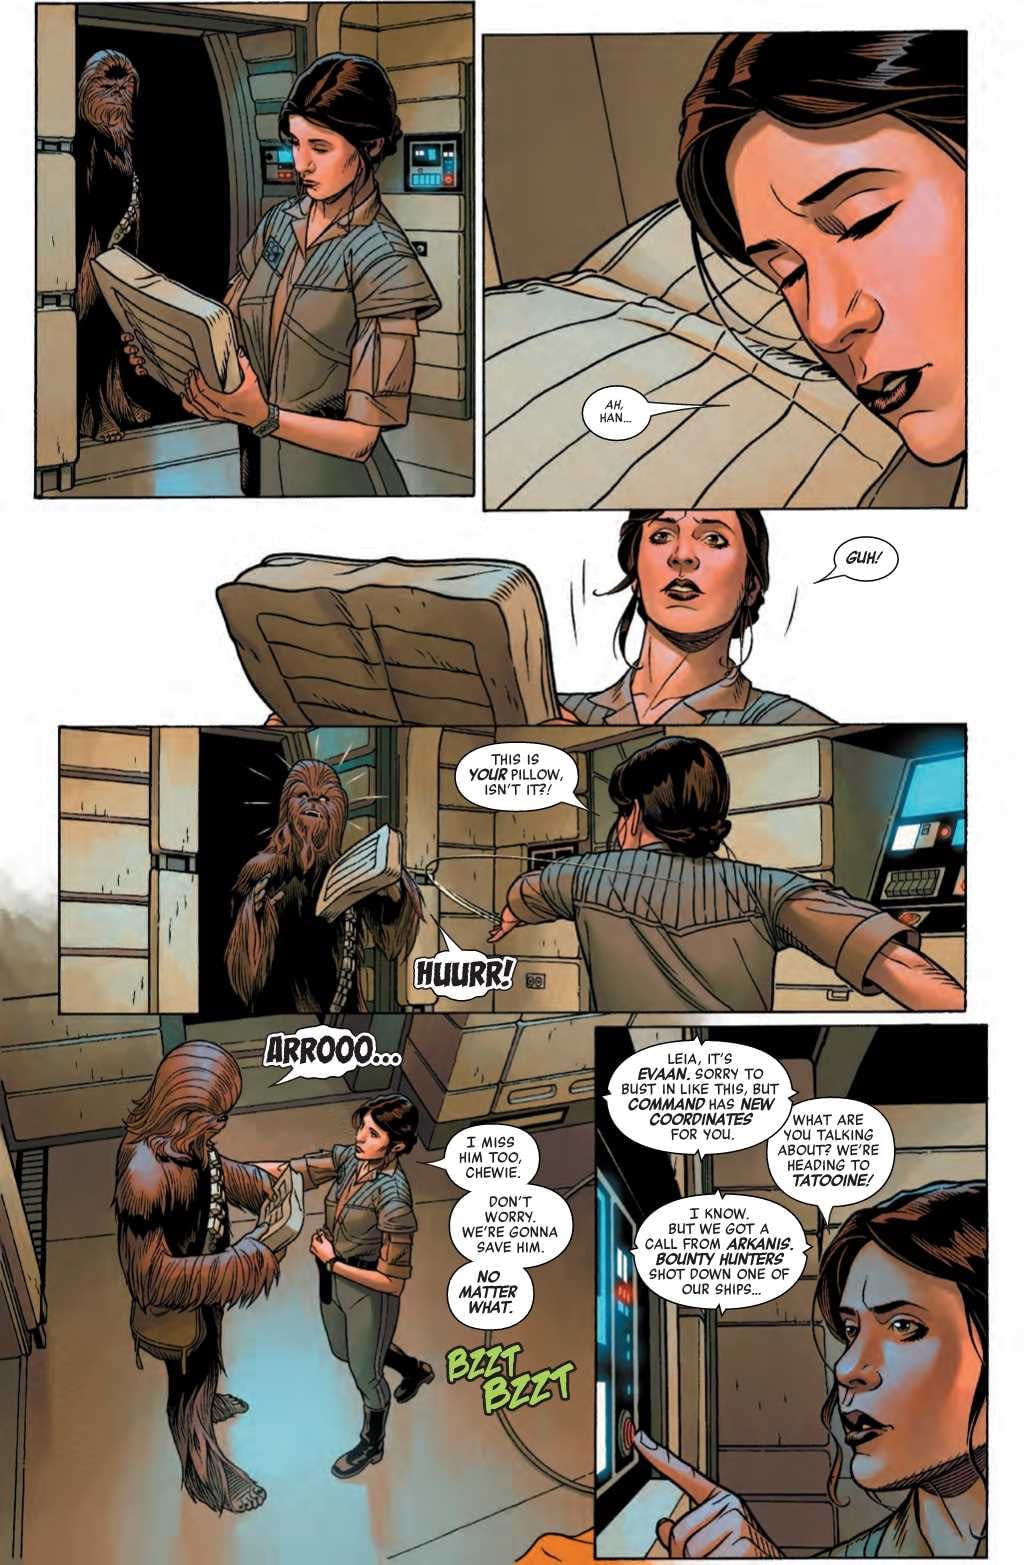 Chebacca's Secret Fetish Revealed in Star Wars AOR Princess Leia #1